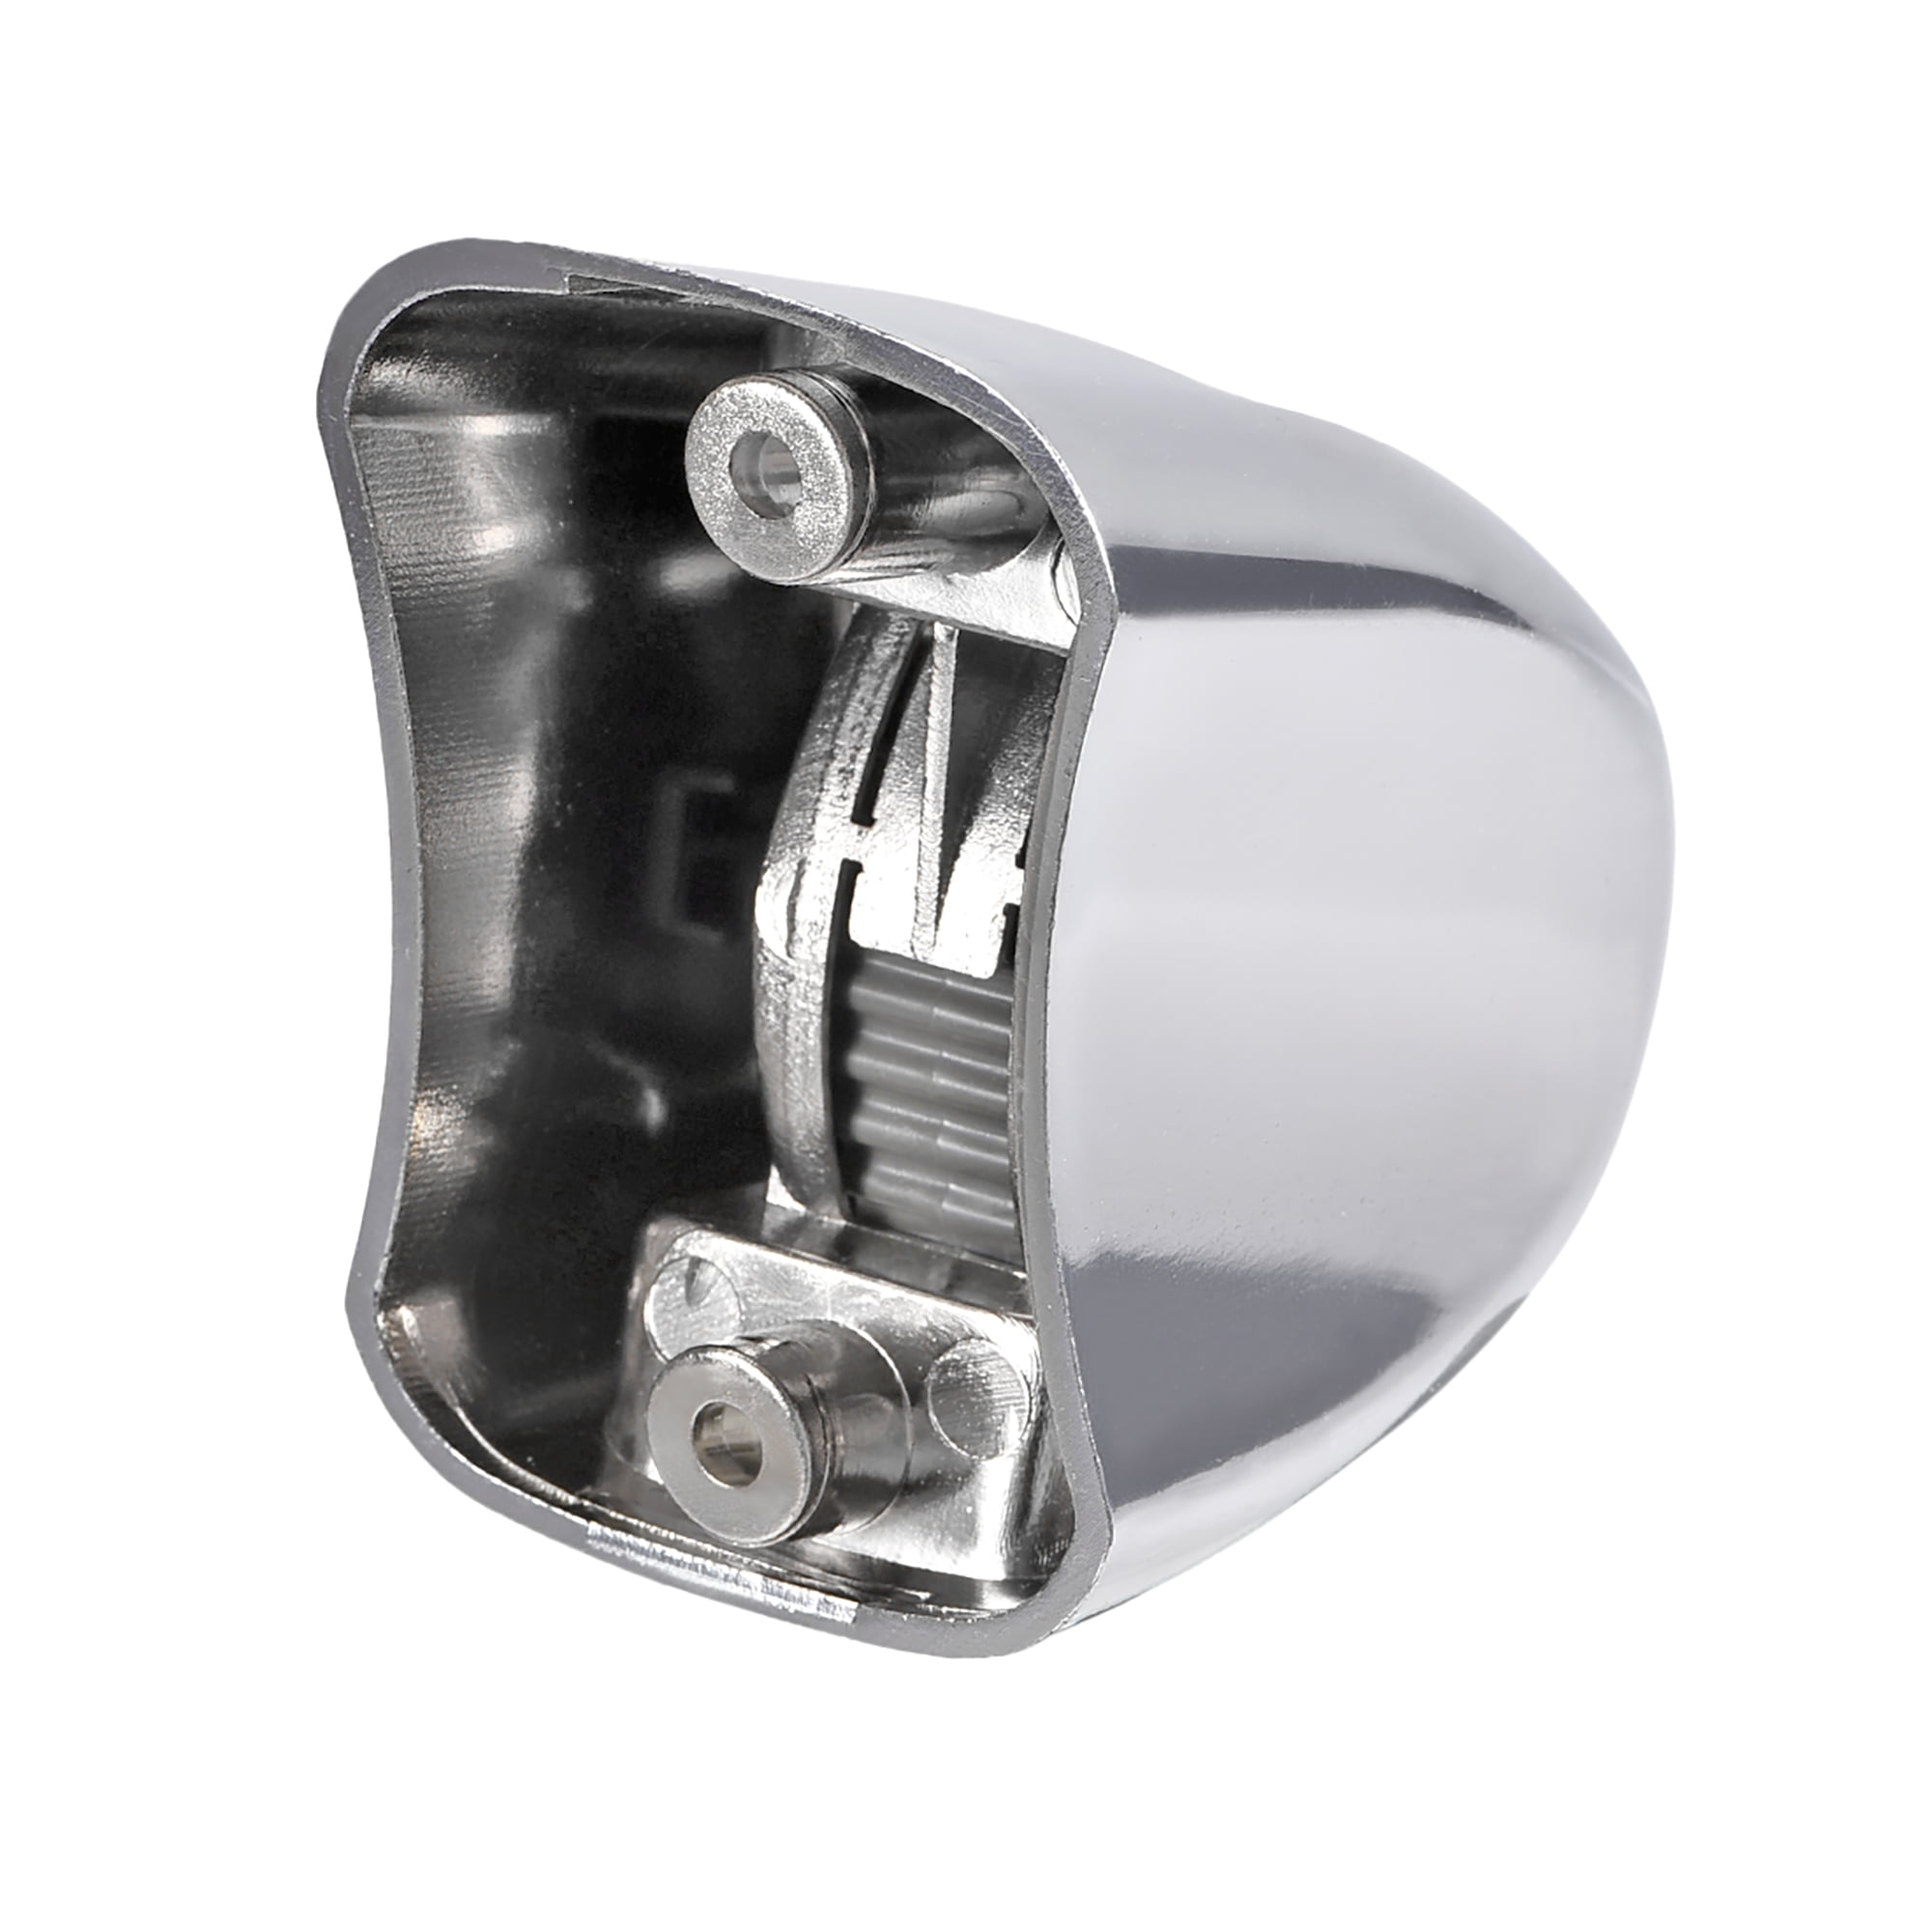 uxcell Shower Head Holder Adjustable ABS Wall Mount Handheld Shower Bracket Silver Tone 2Pcs